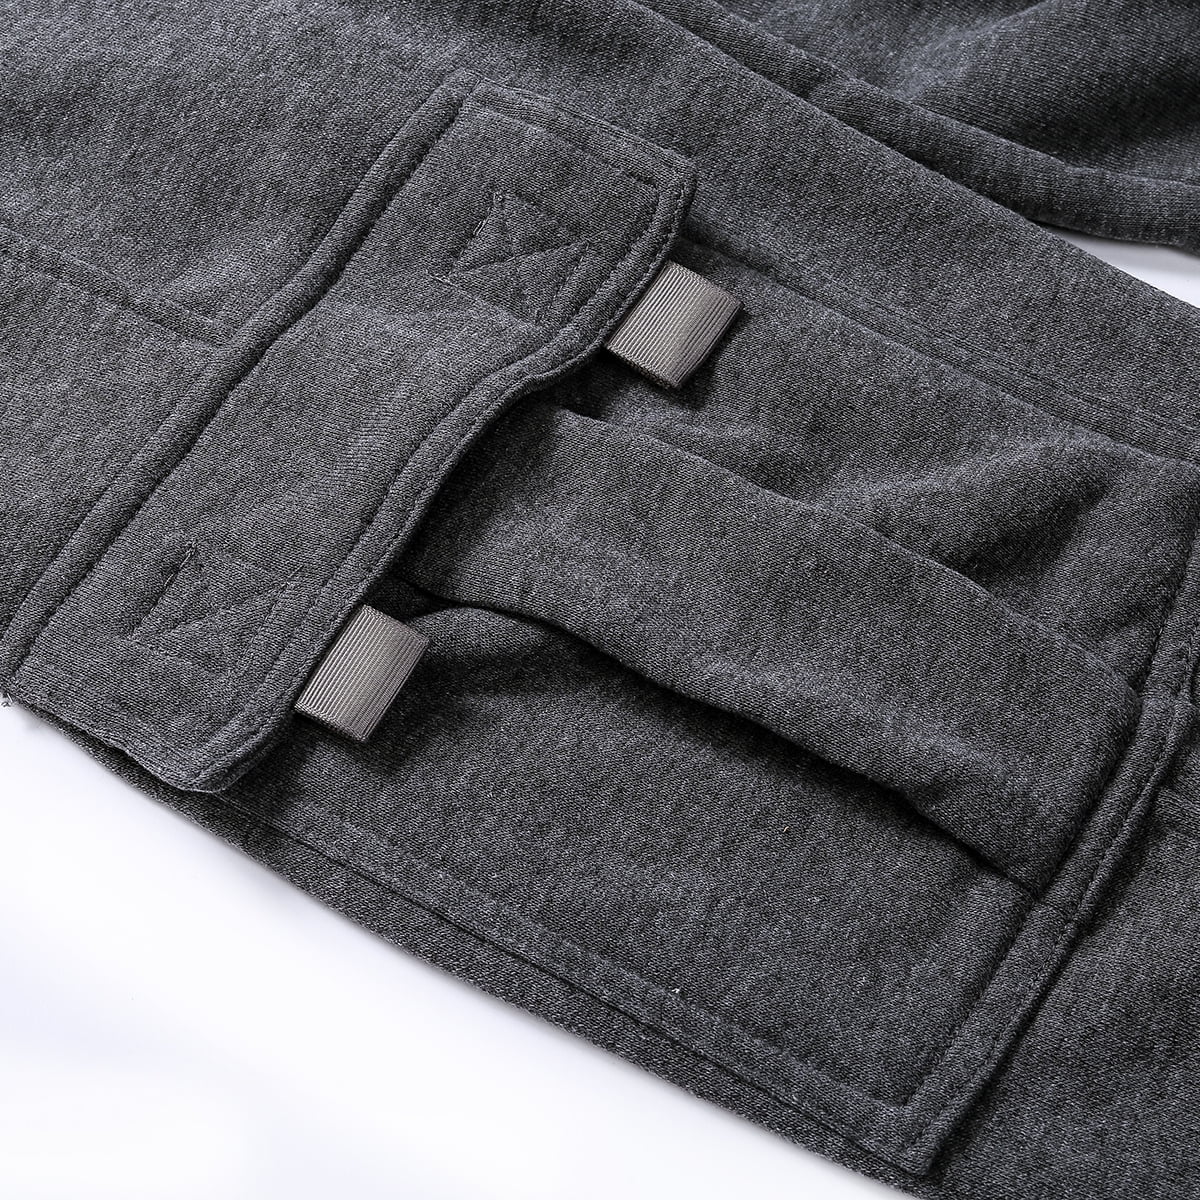 Qiylii Men's Fleece Cargo Sweatpants Relaxed Fit Bungee Cord Open Bottom